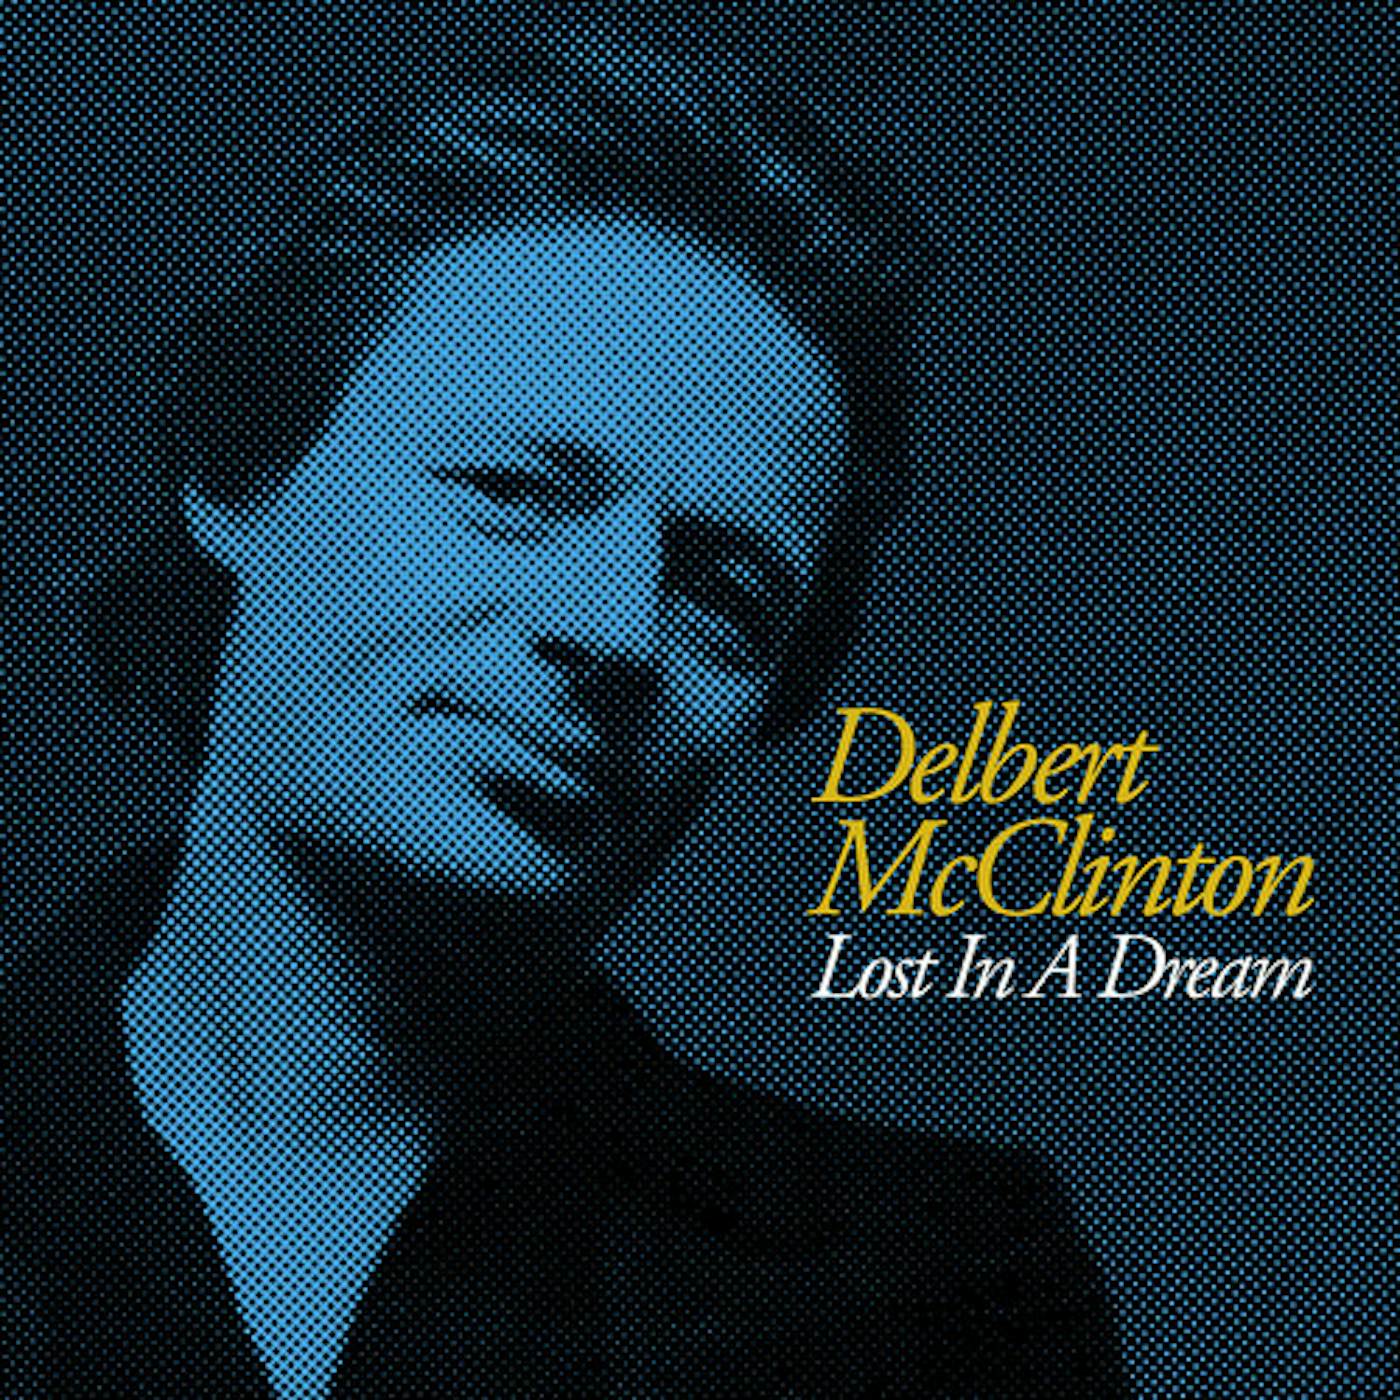 Delbert McClinton LOST IN A DREAM CD